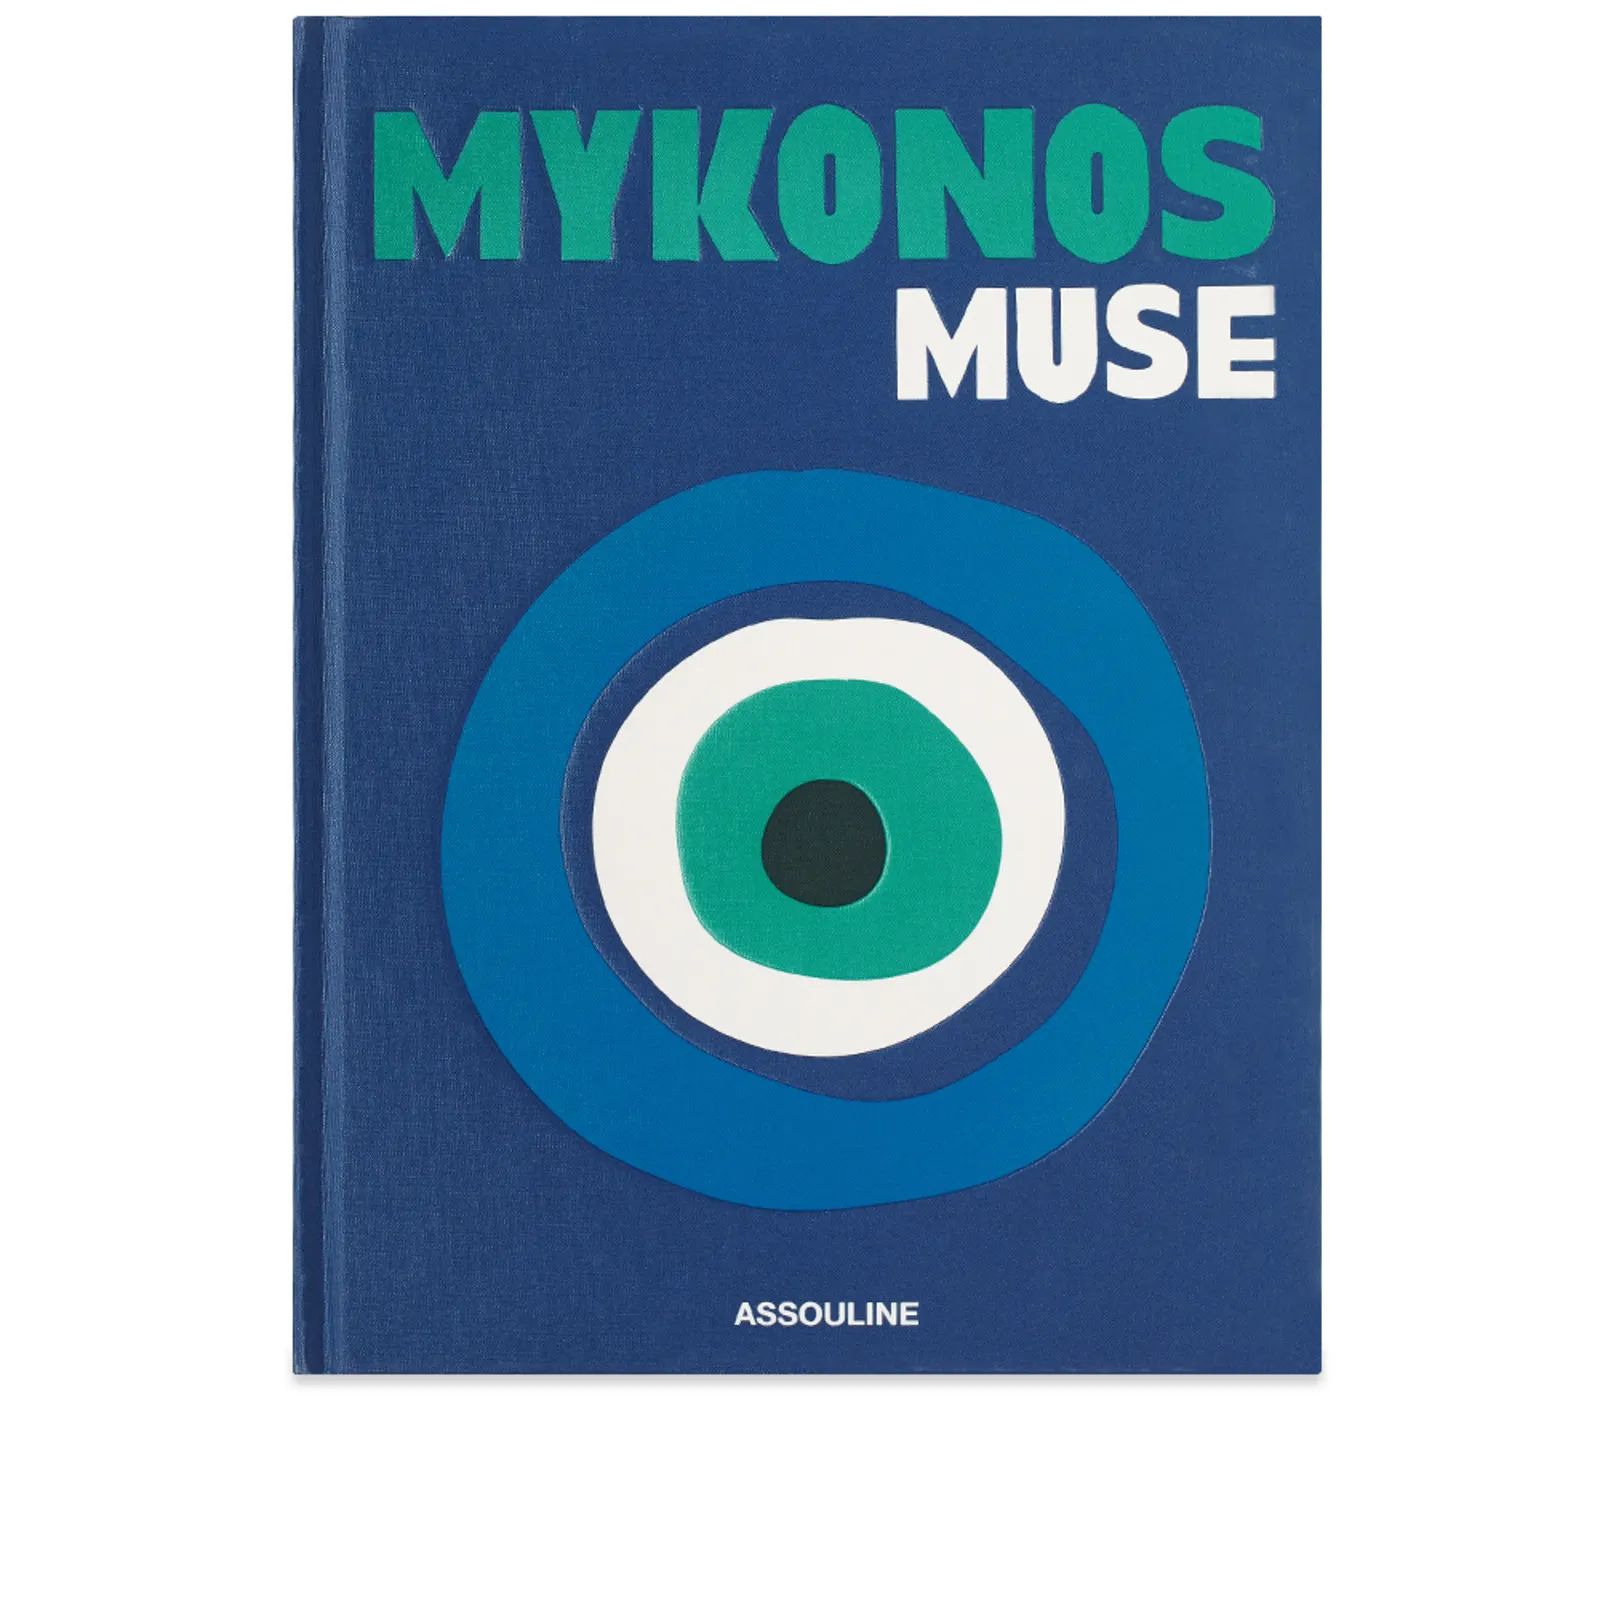 Mykonos Muse Lizy Manola | END. | End Clothing (UK & IE)